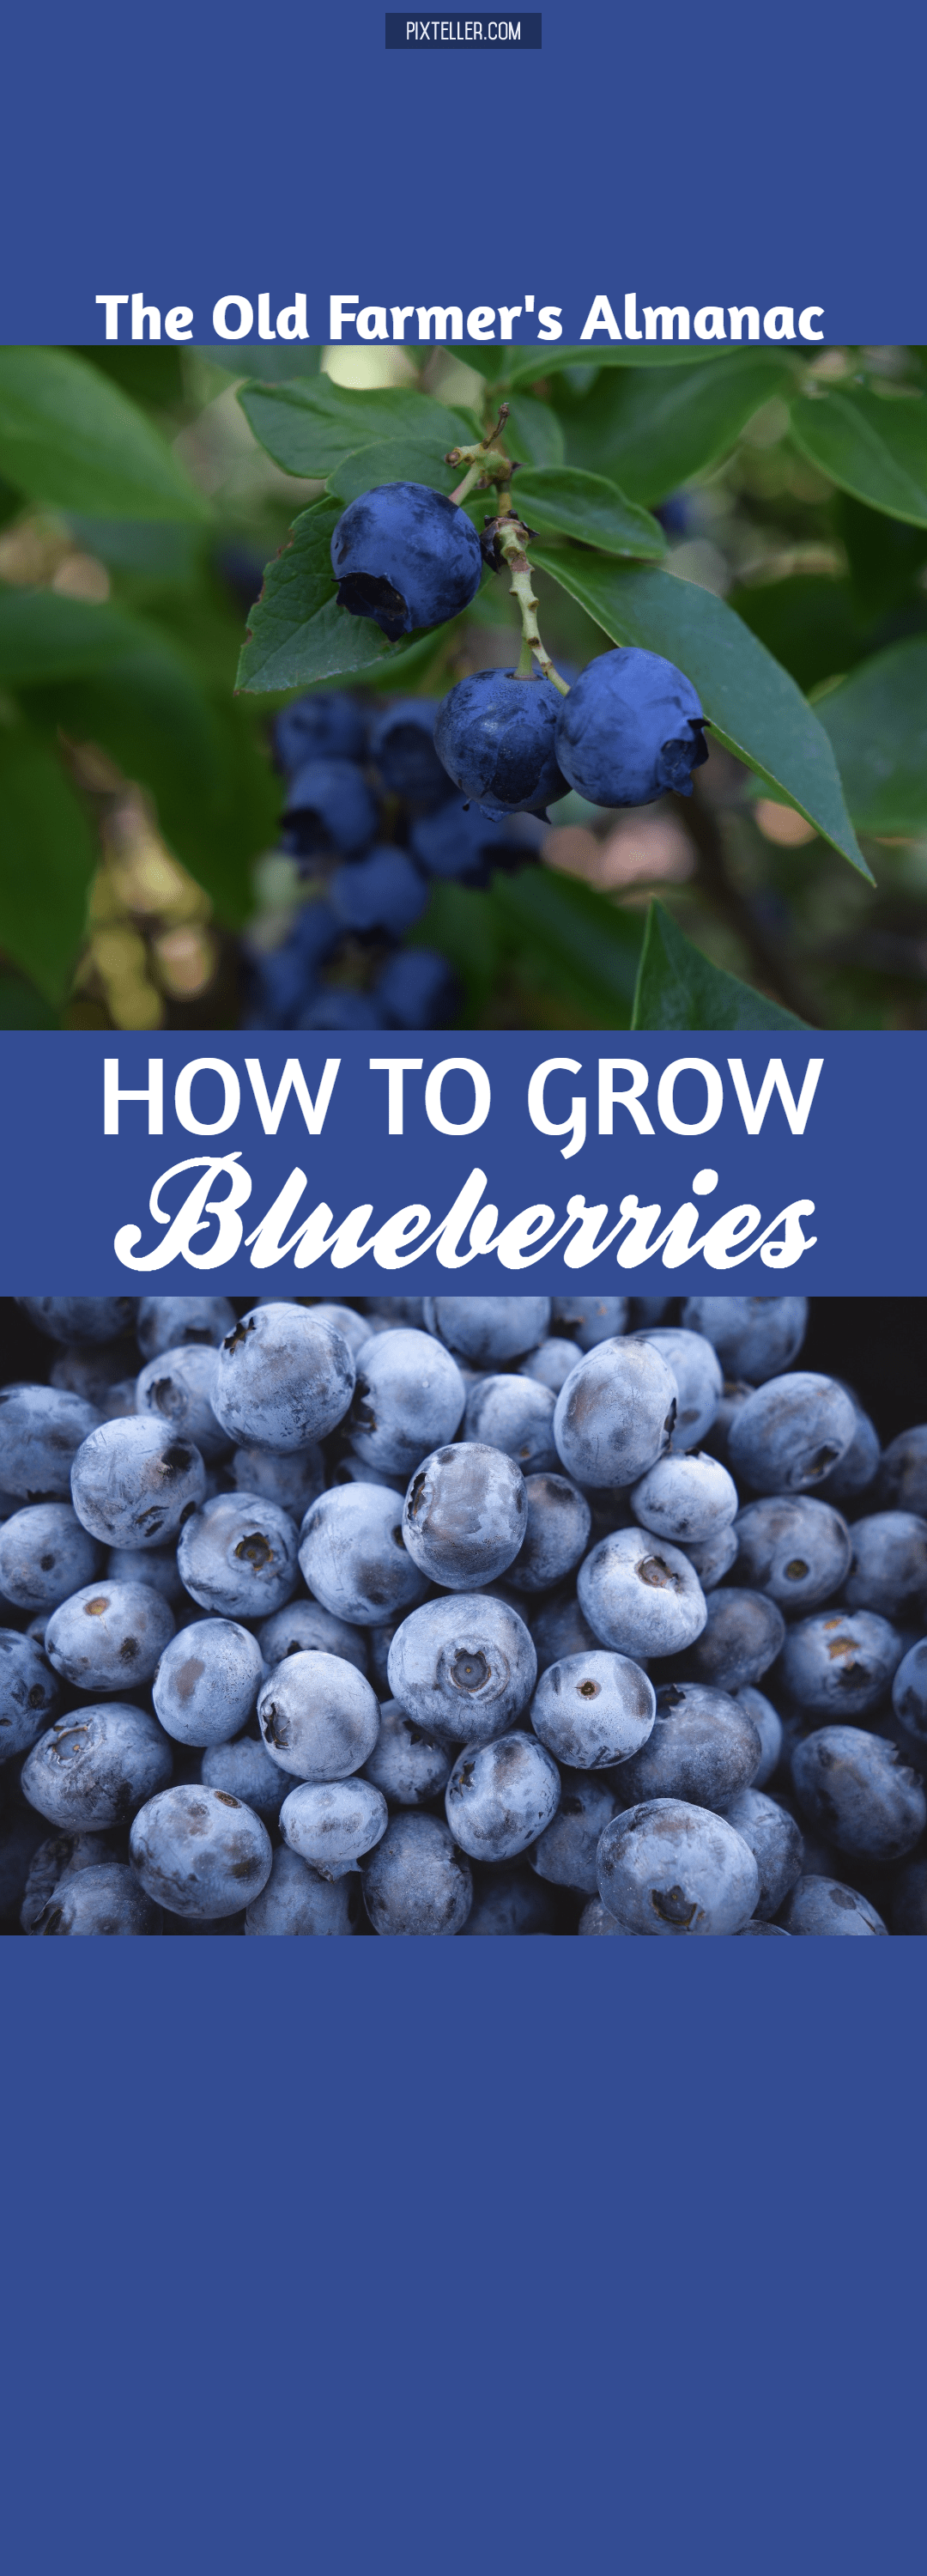 OFA 5-11-17 grow Blueberries Design 